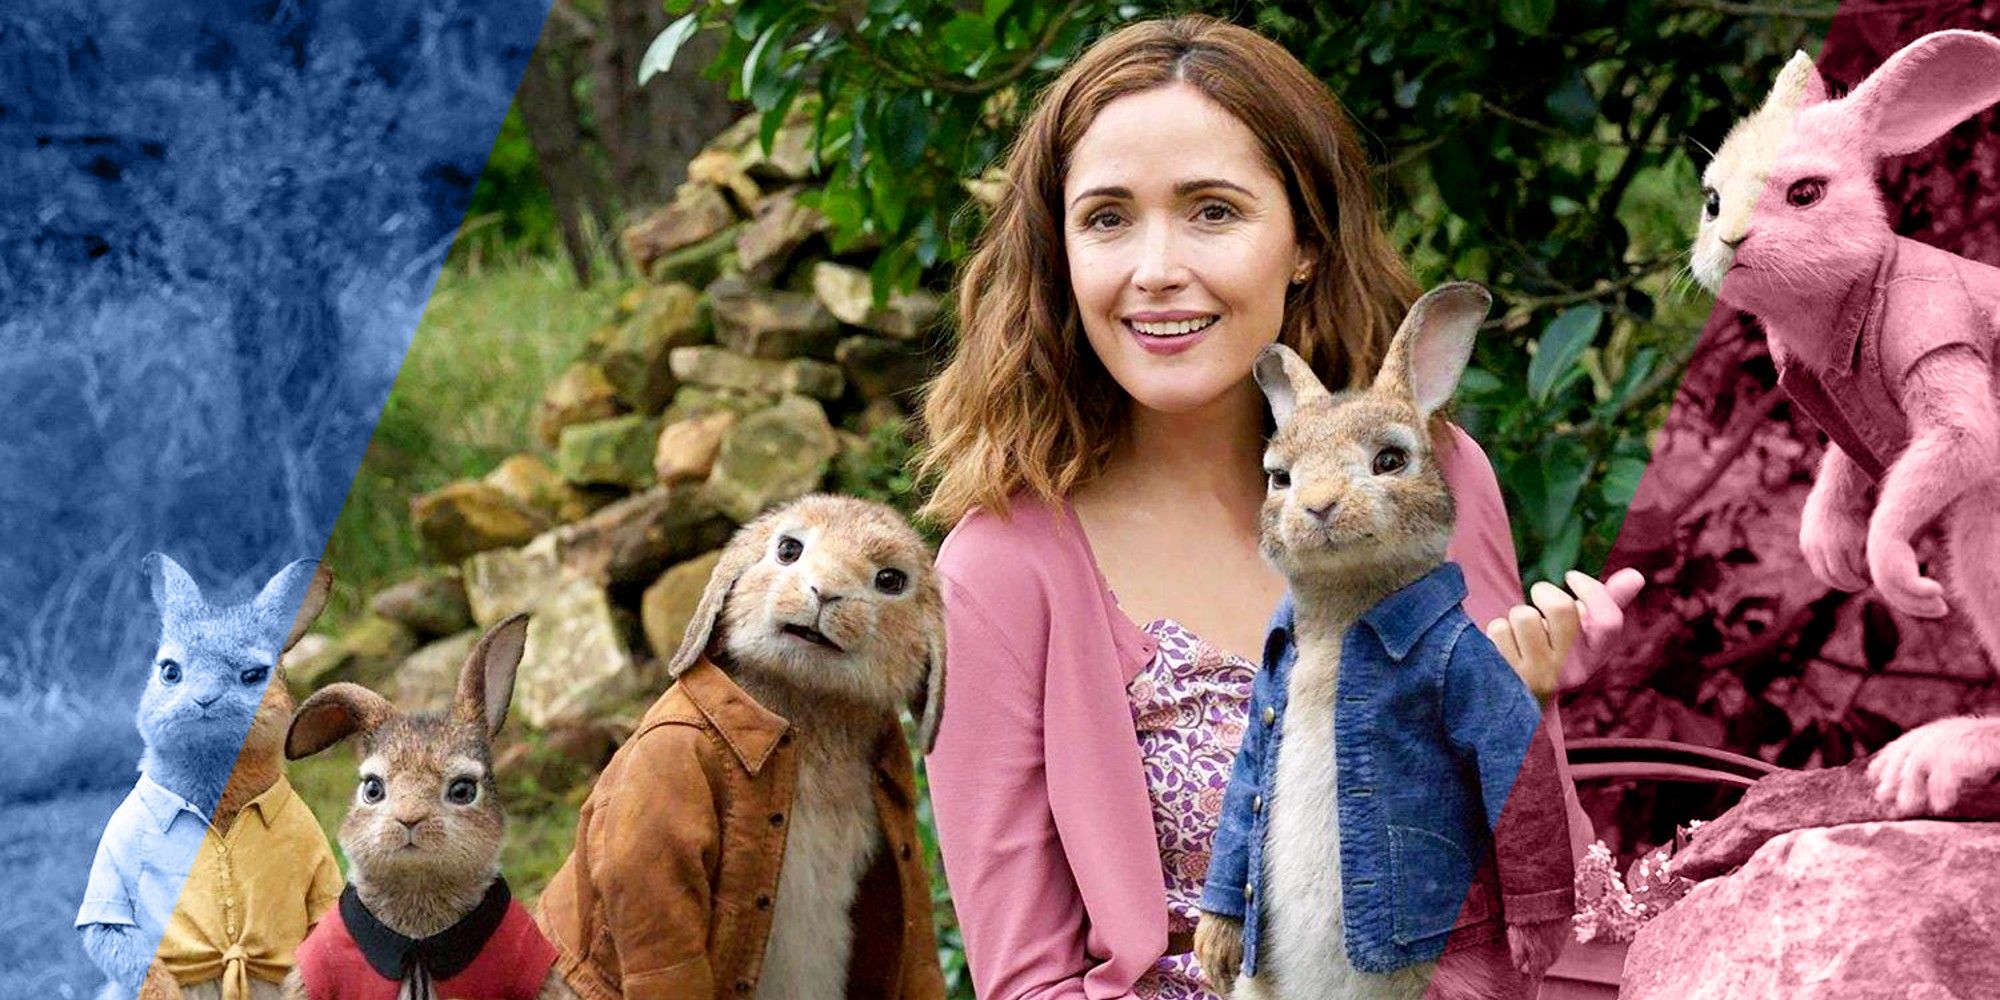 peter rabbit 3 release date story cast